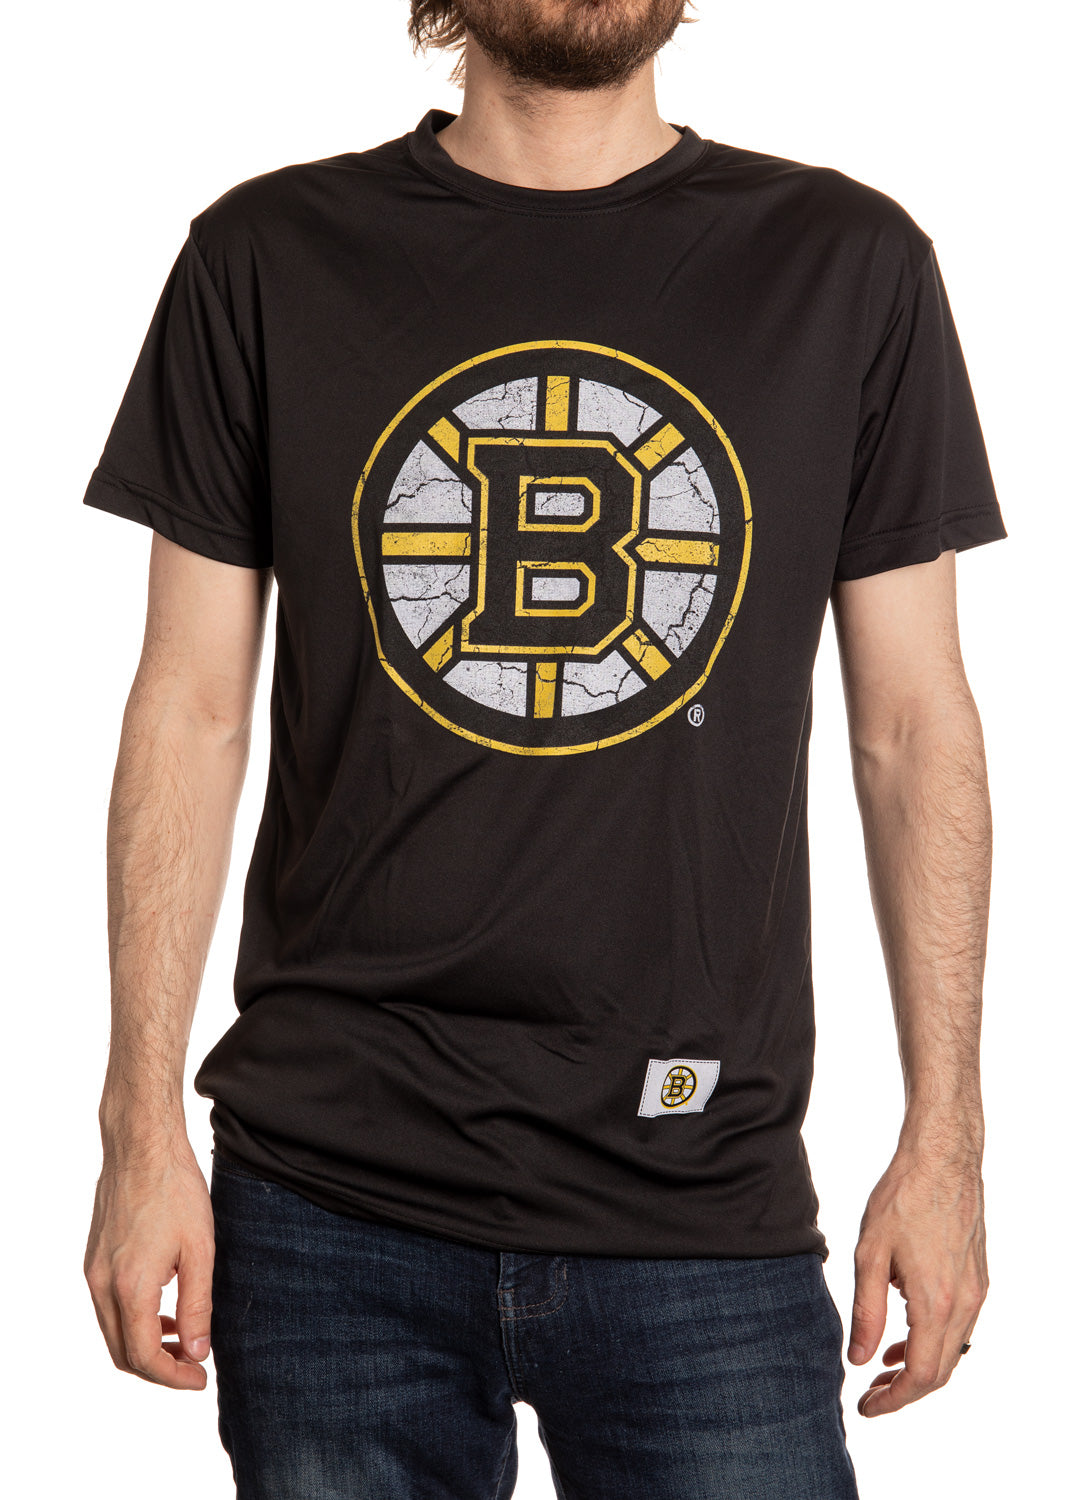 Boston Bruins Apparel, Bruins Clothing & Gear